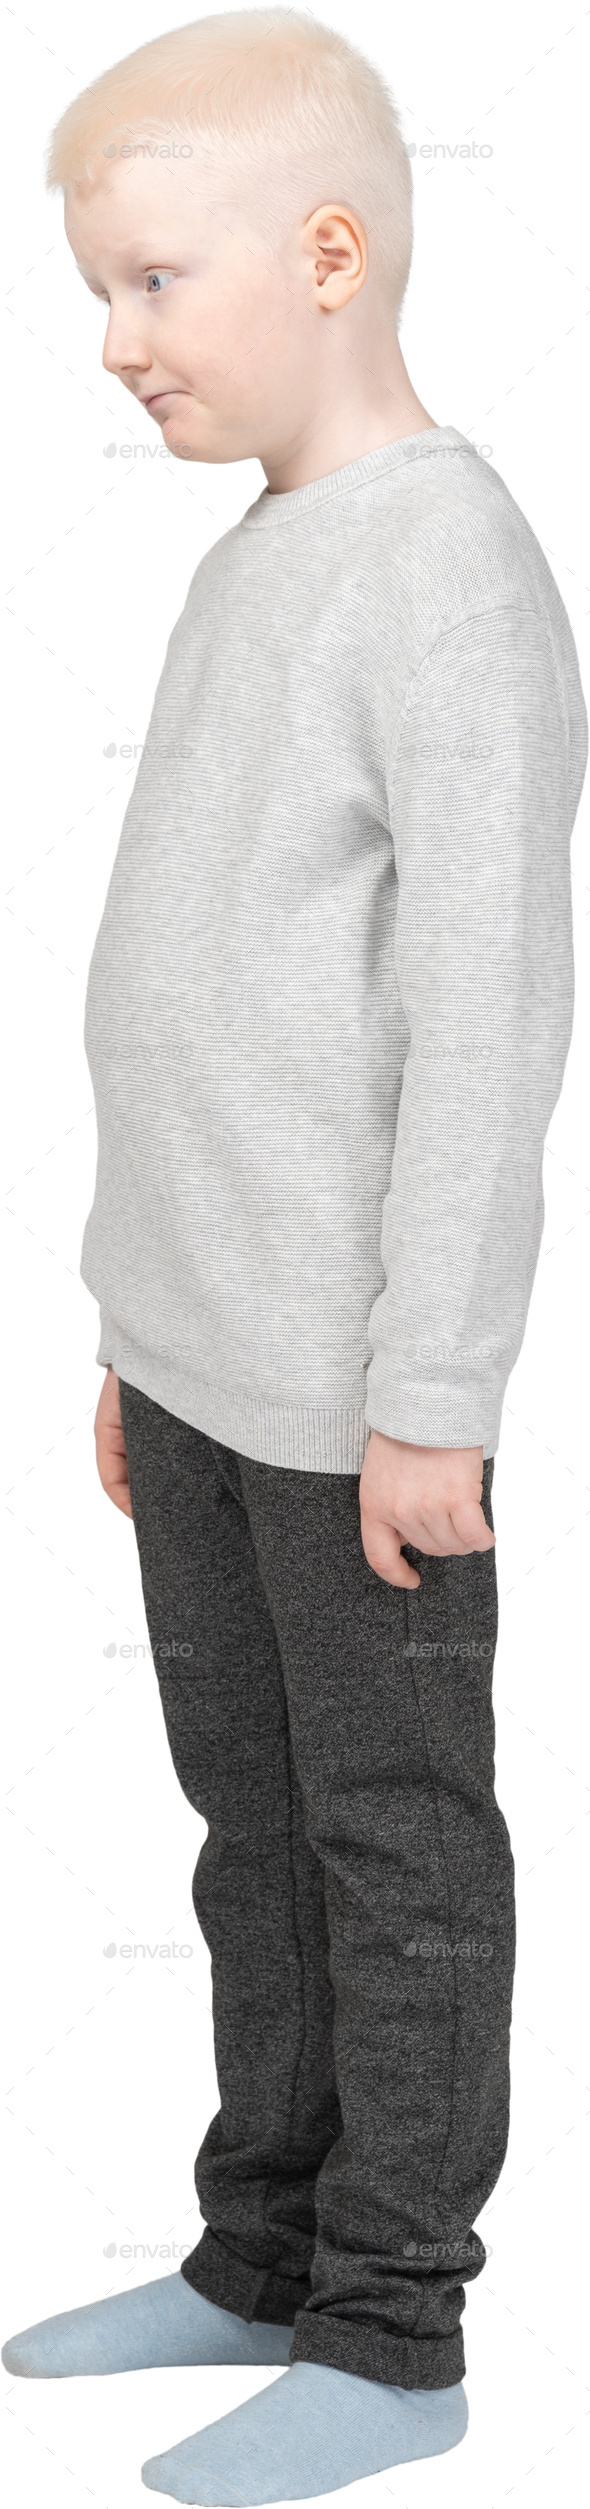 a young boy wearing a gray sweatshirt and gray pants